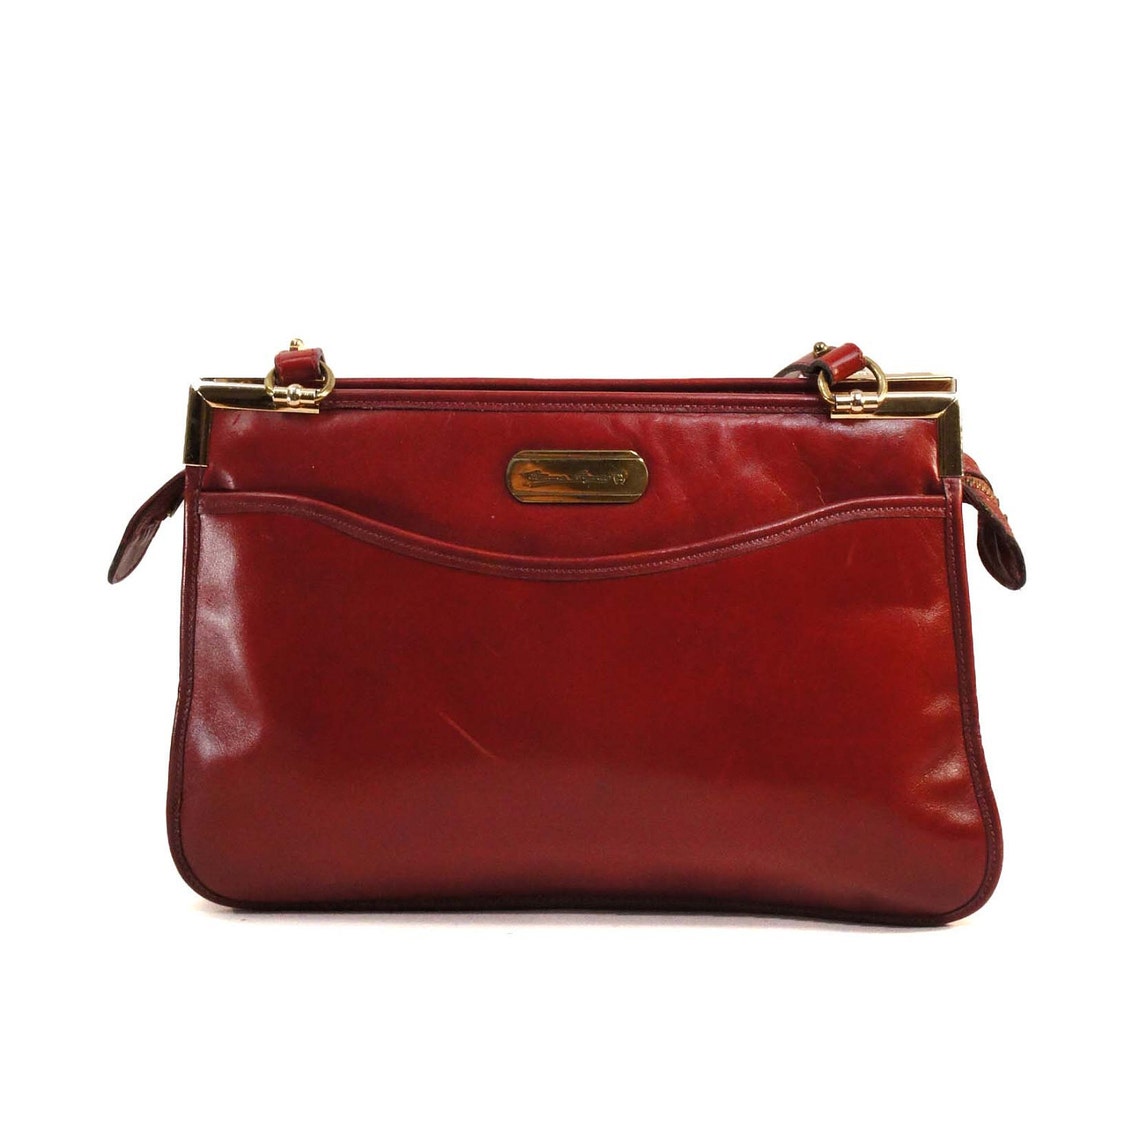 Vintage Etienne Aigner Handbag in Signature Burgundy Leather | Etsy